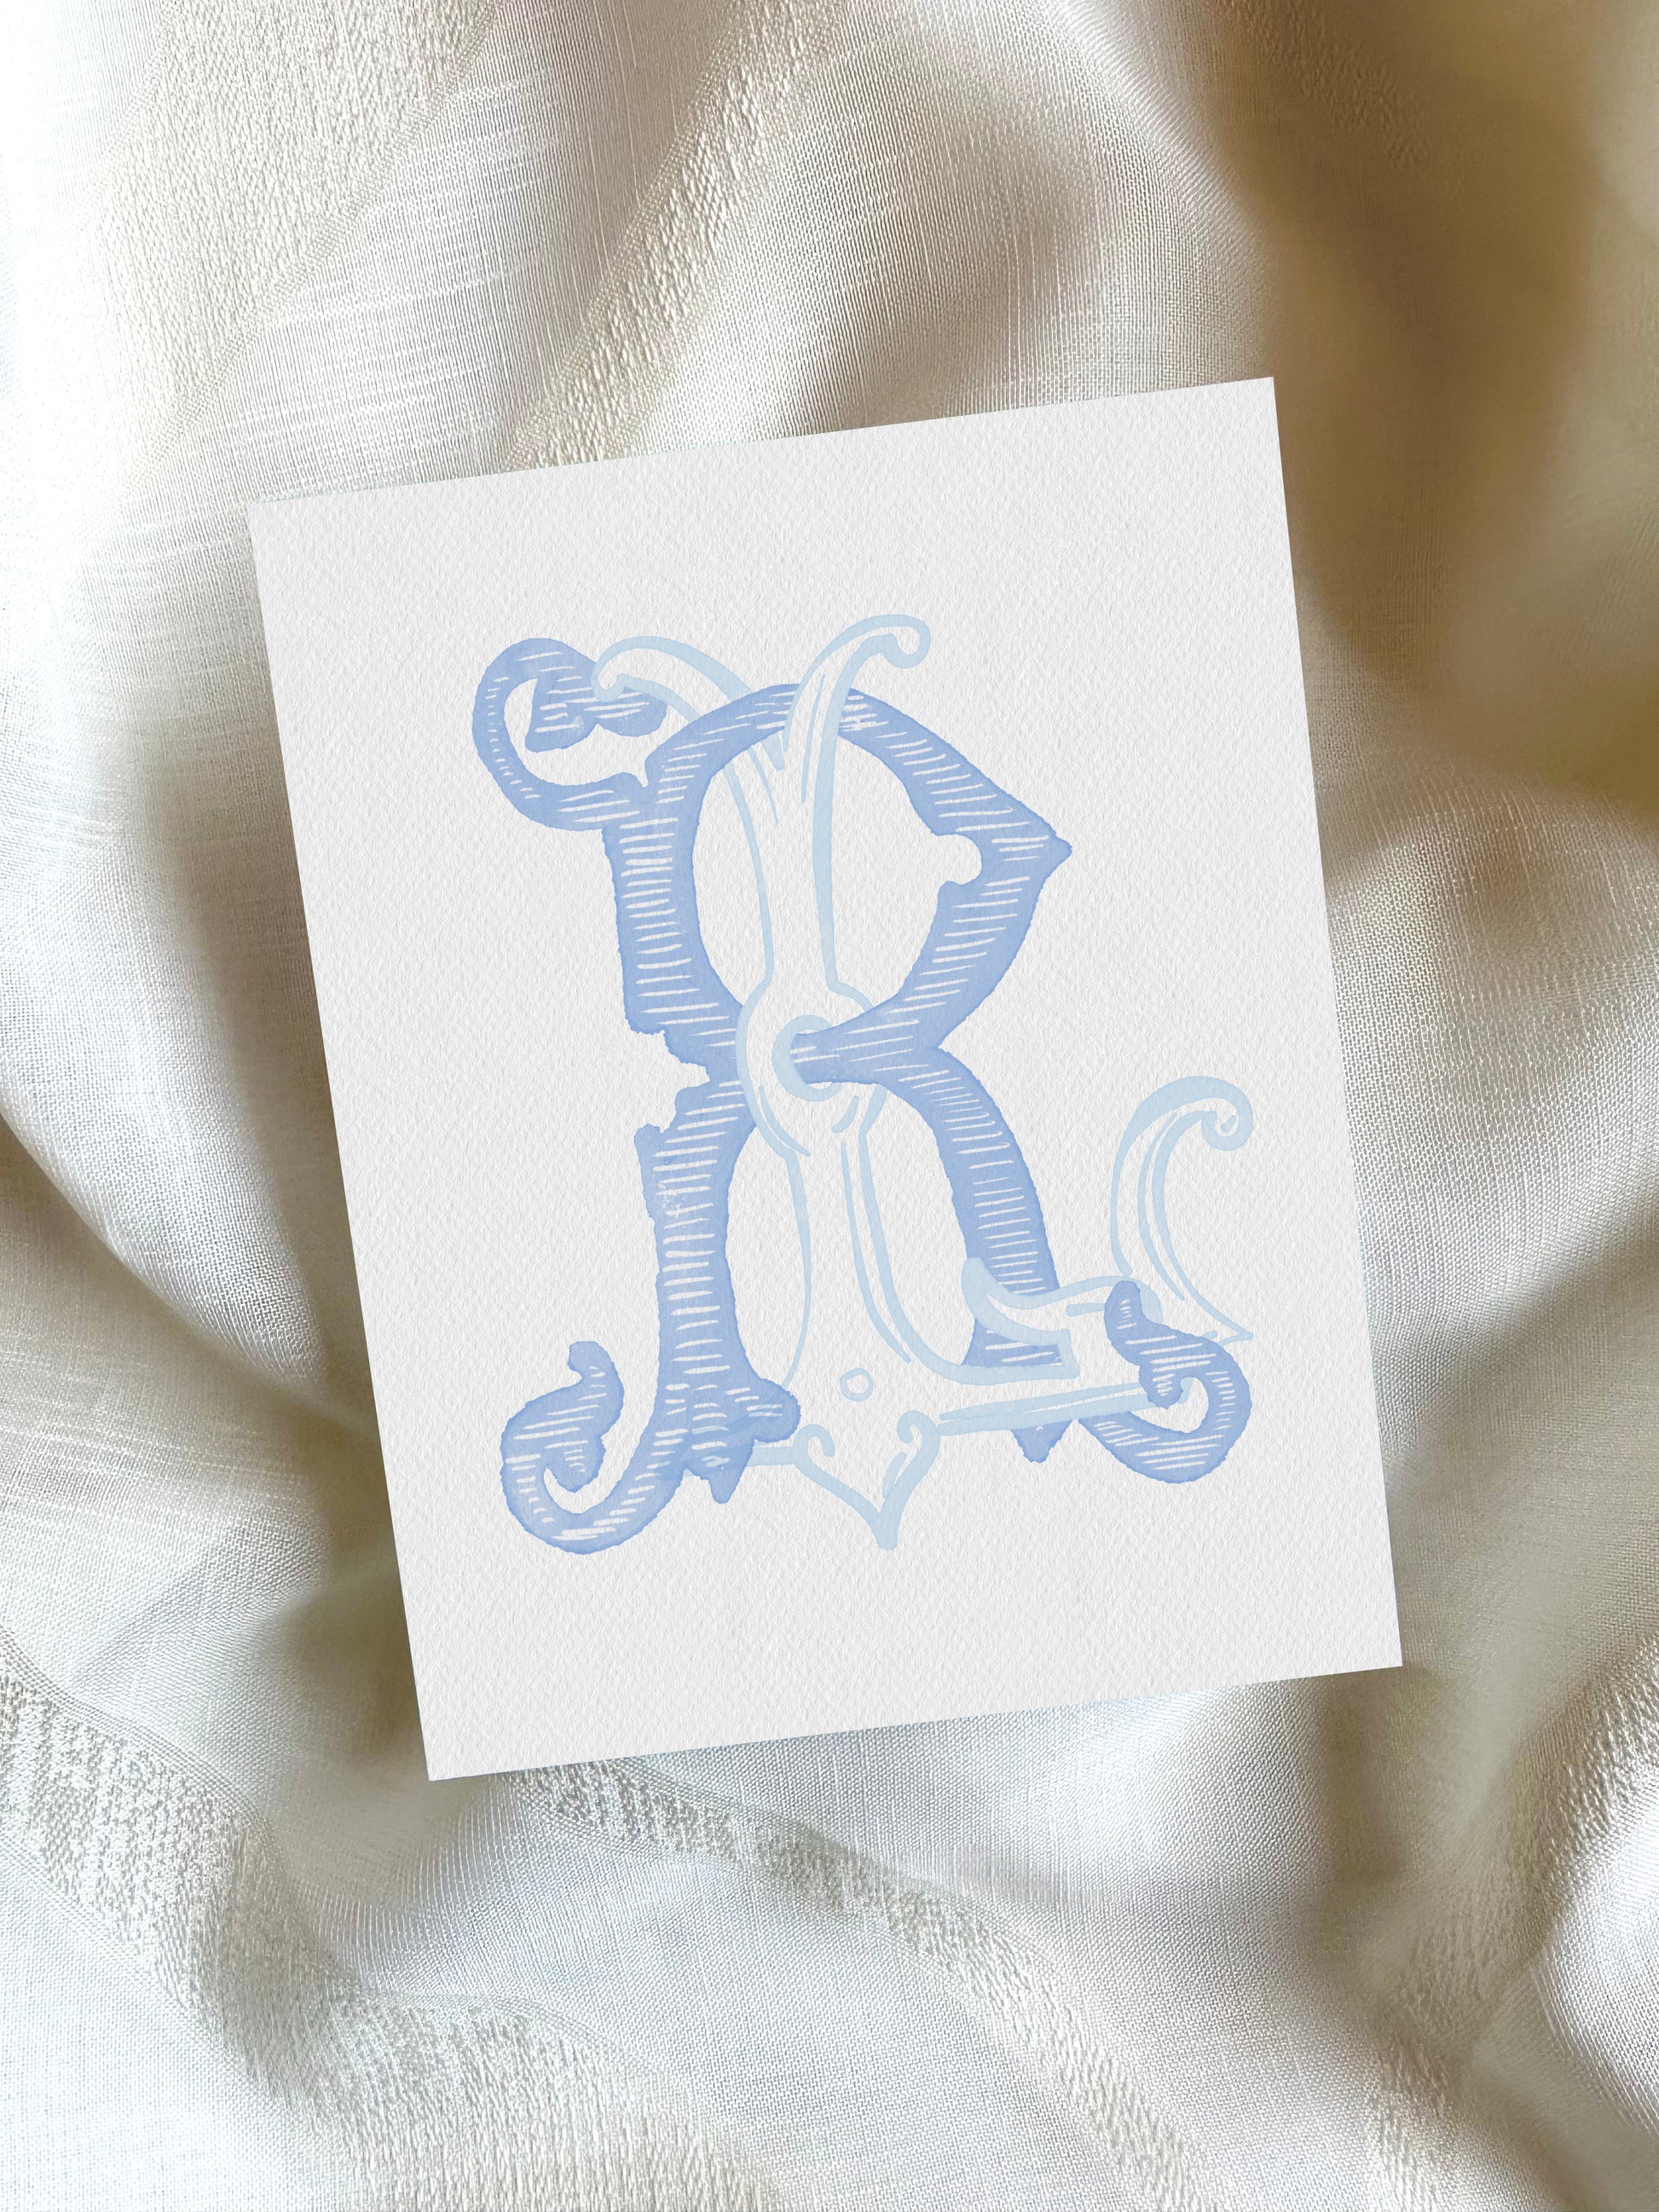 2 Letter Monogram with Letters LR RL | Digital Download - Wedding Monogram SVG, Personal Logo, Wedding Logo for Wedding Invitations The Wedding Crest Lab